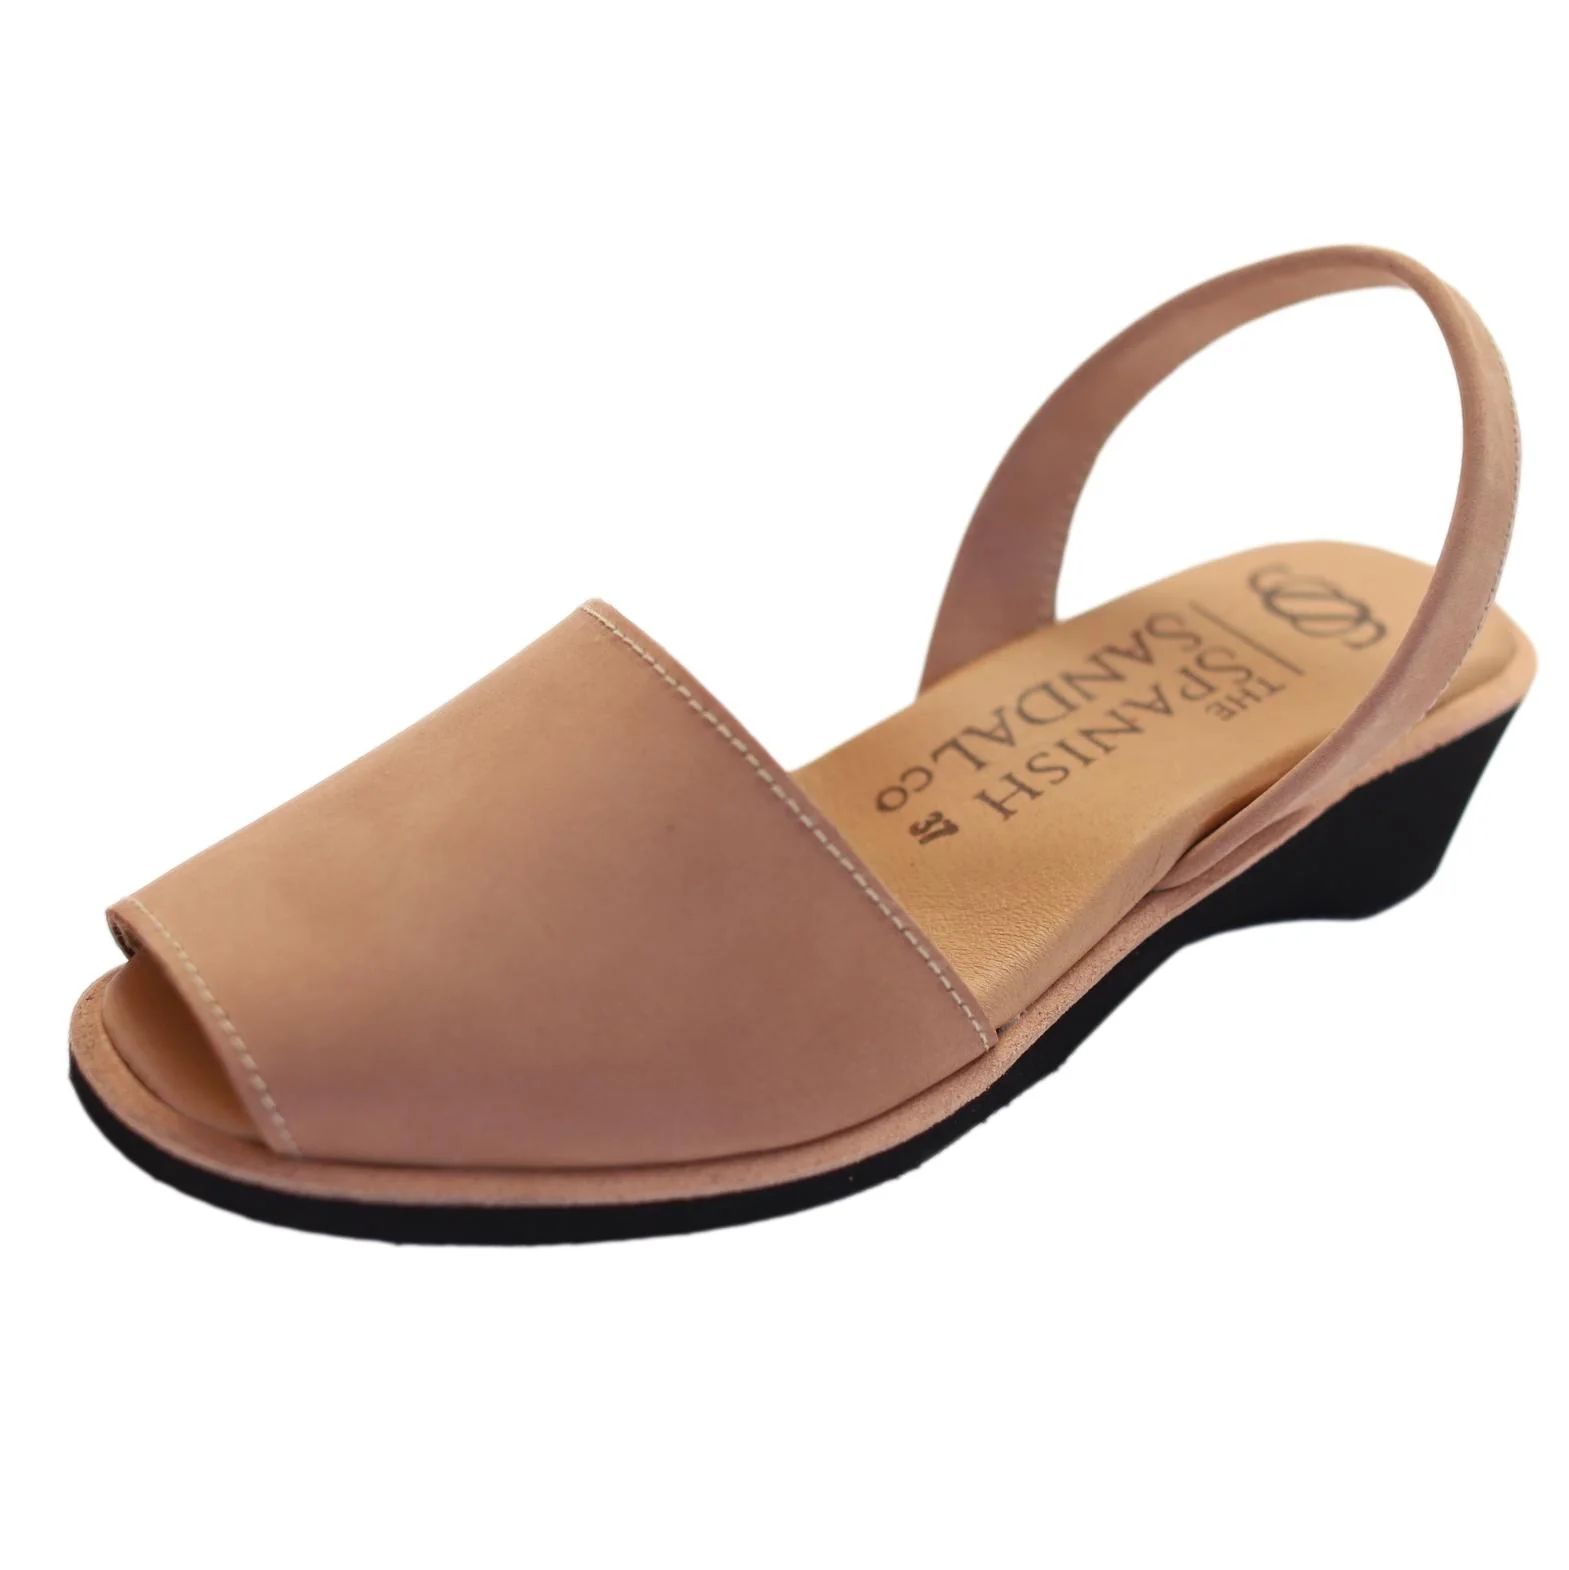 Tan nubuck midi wedge sandals | The Spanish Sandal Company